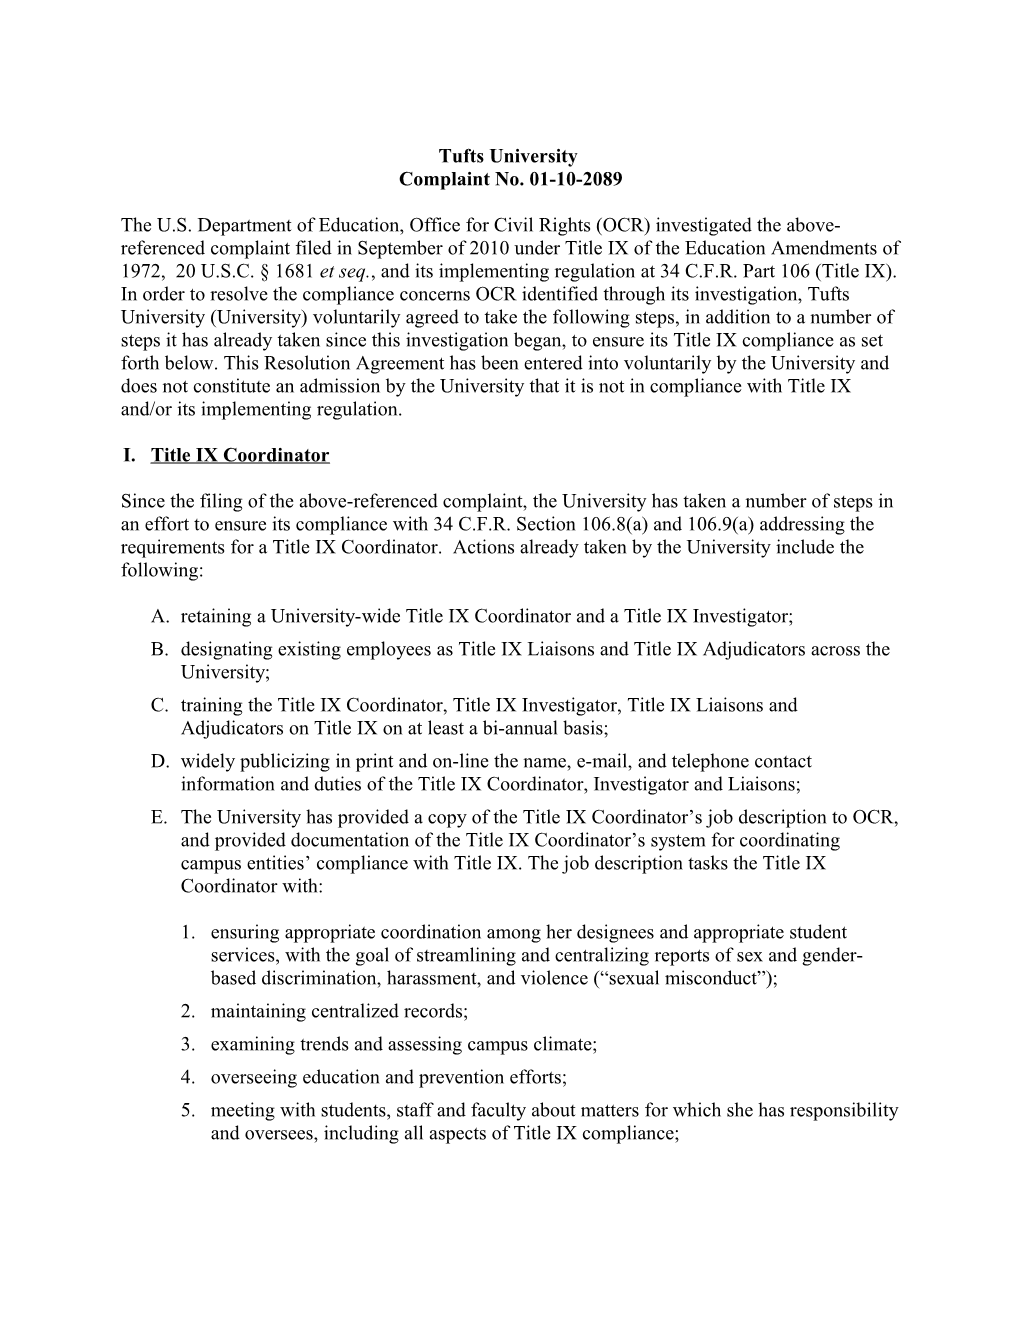 Resolution Agreement: Tufts University, Massachusetts: Compliance Review #01-10-2089 April